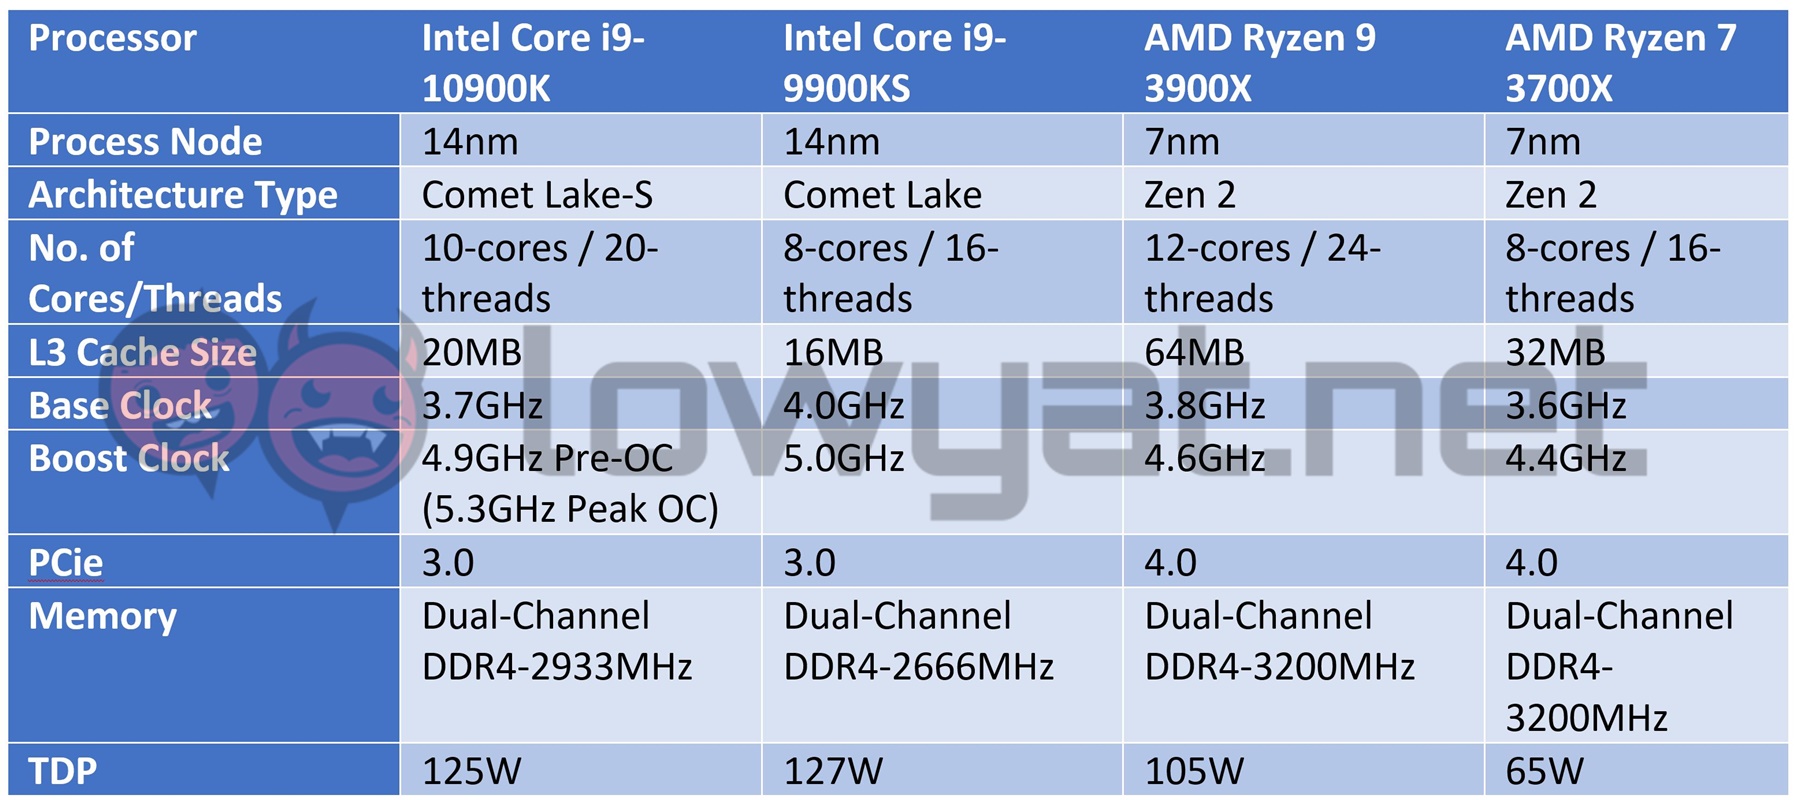 Intel Core i9 10900k specs sheet comparison